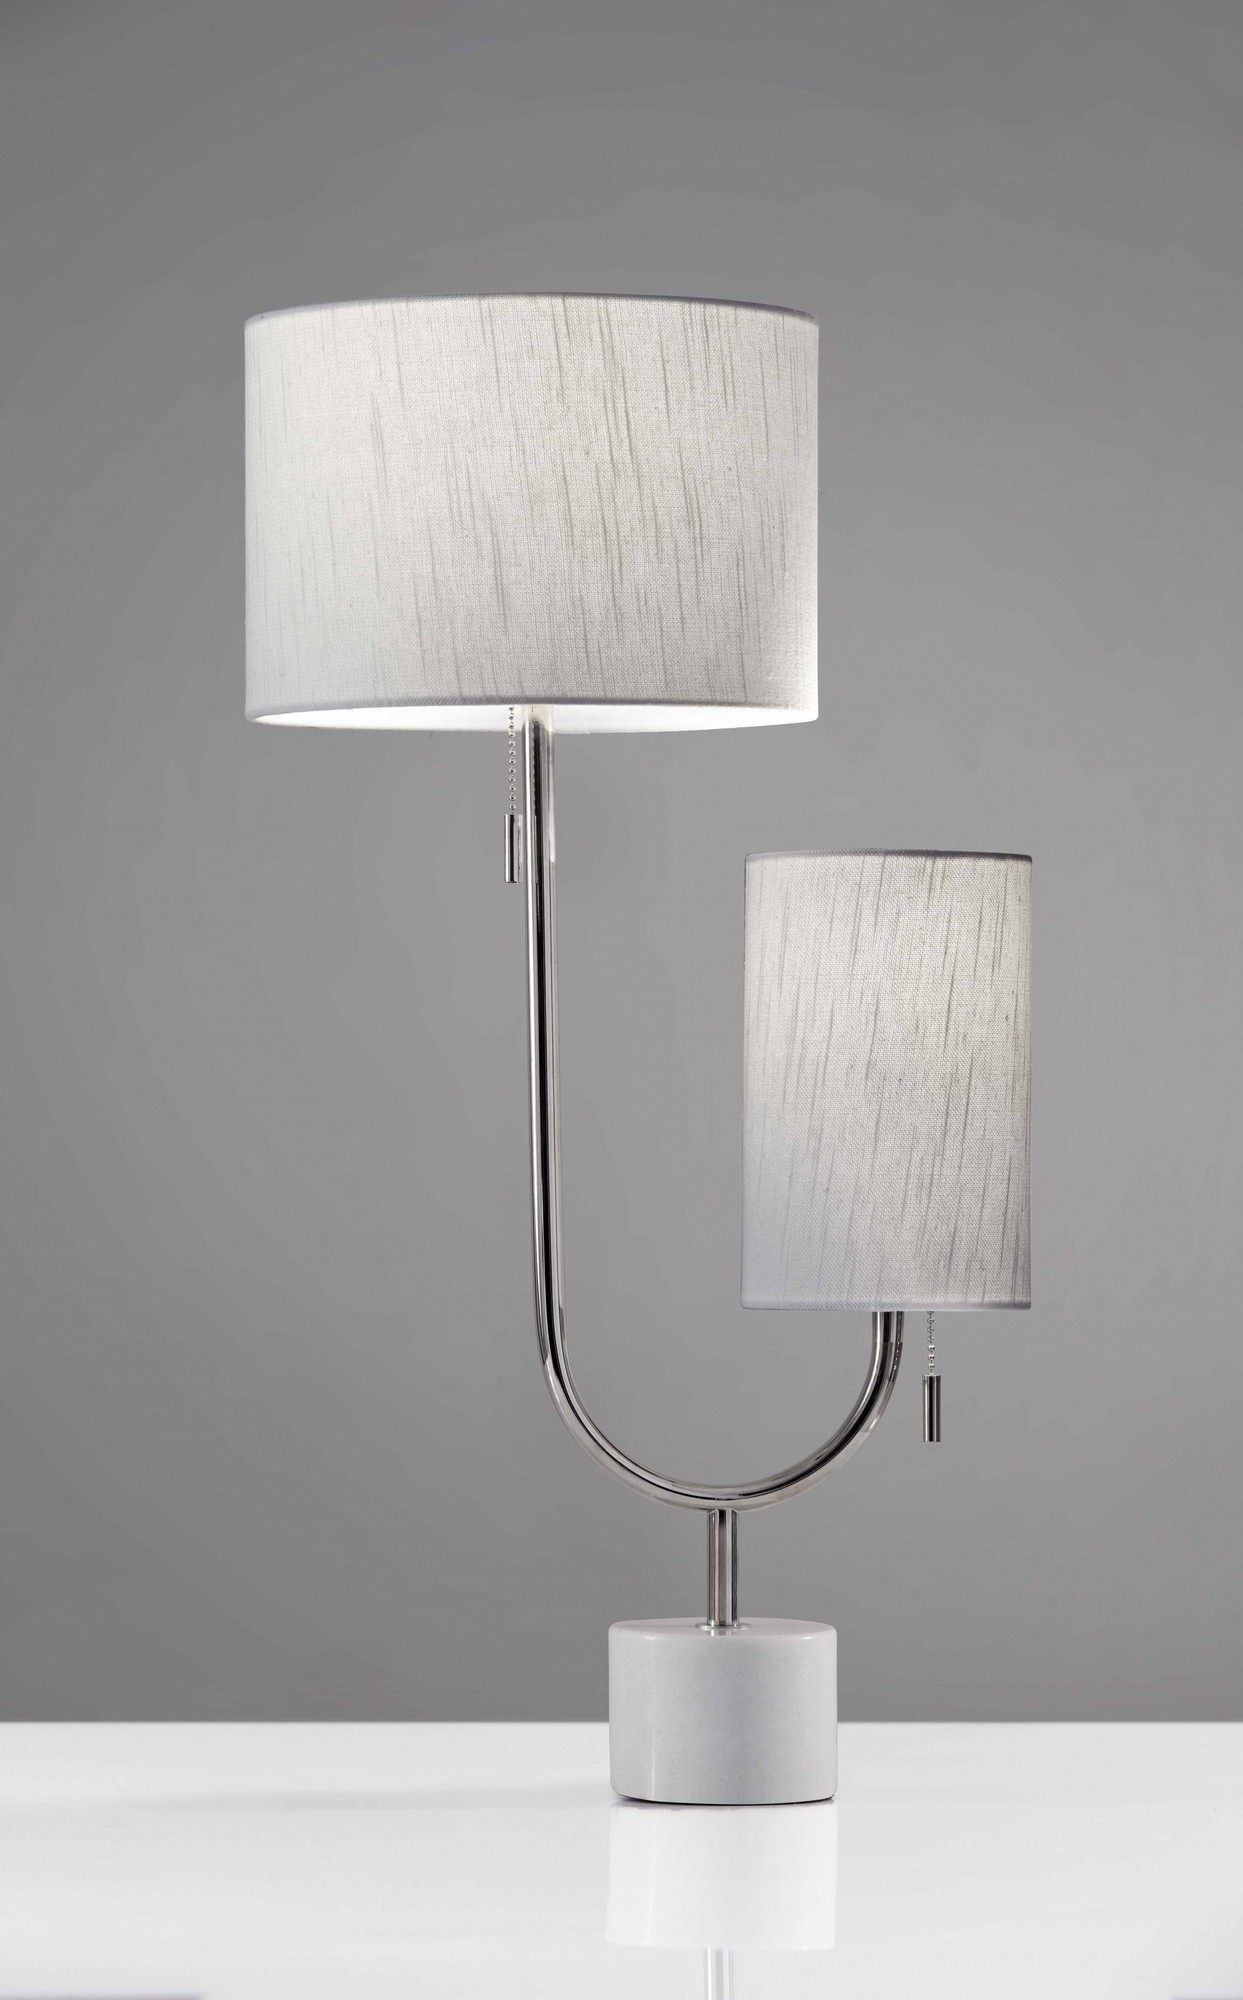 10" X 13.5" X 26" Chrome Metal Table Lamp